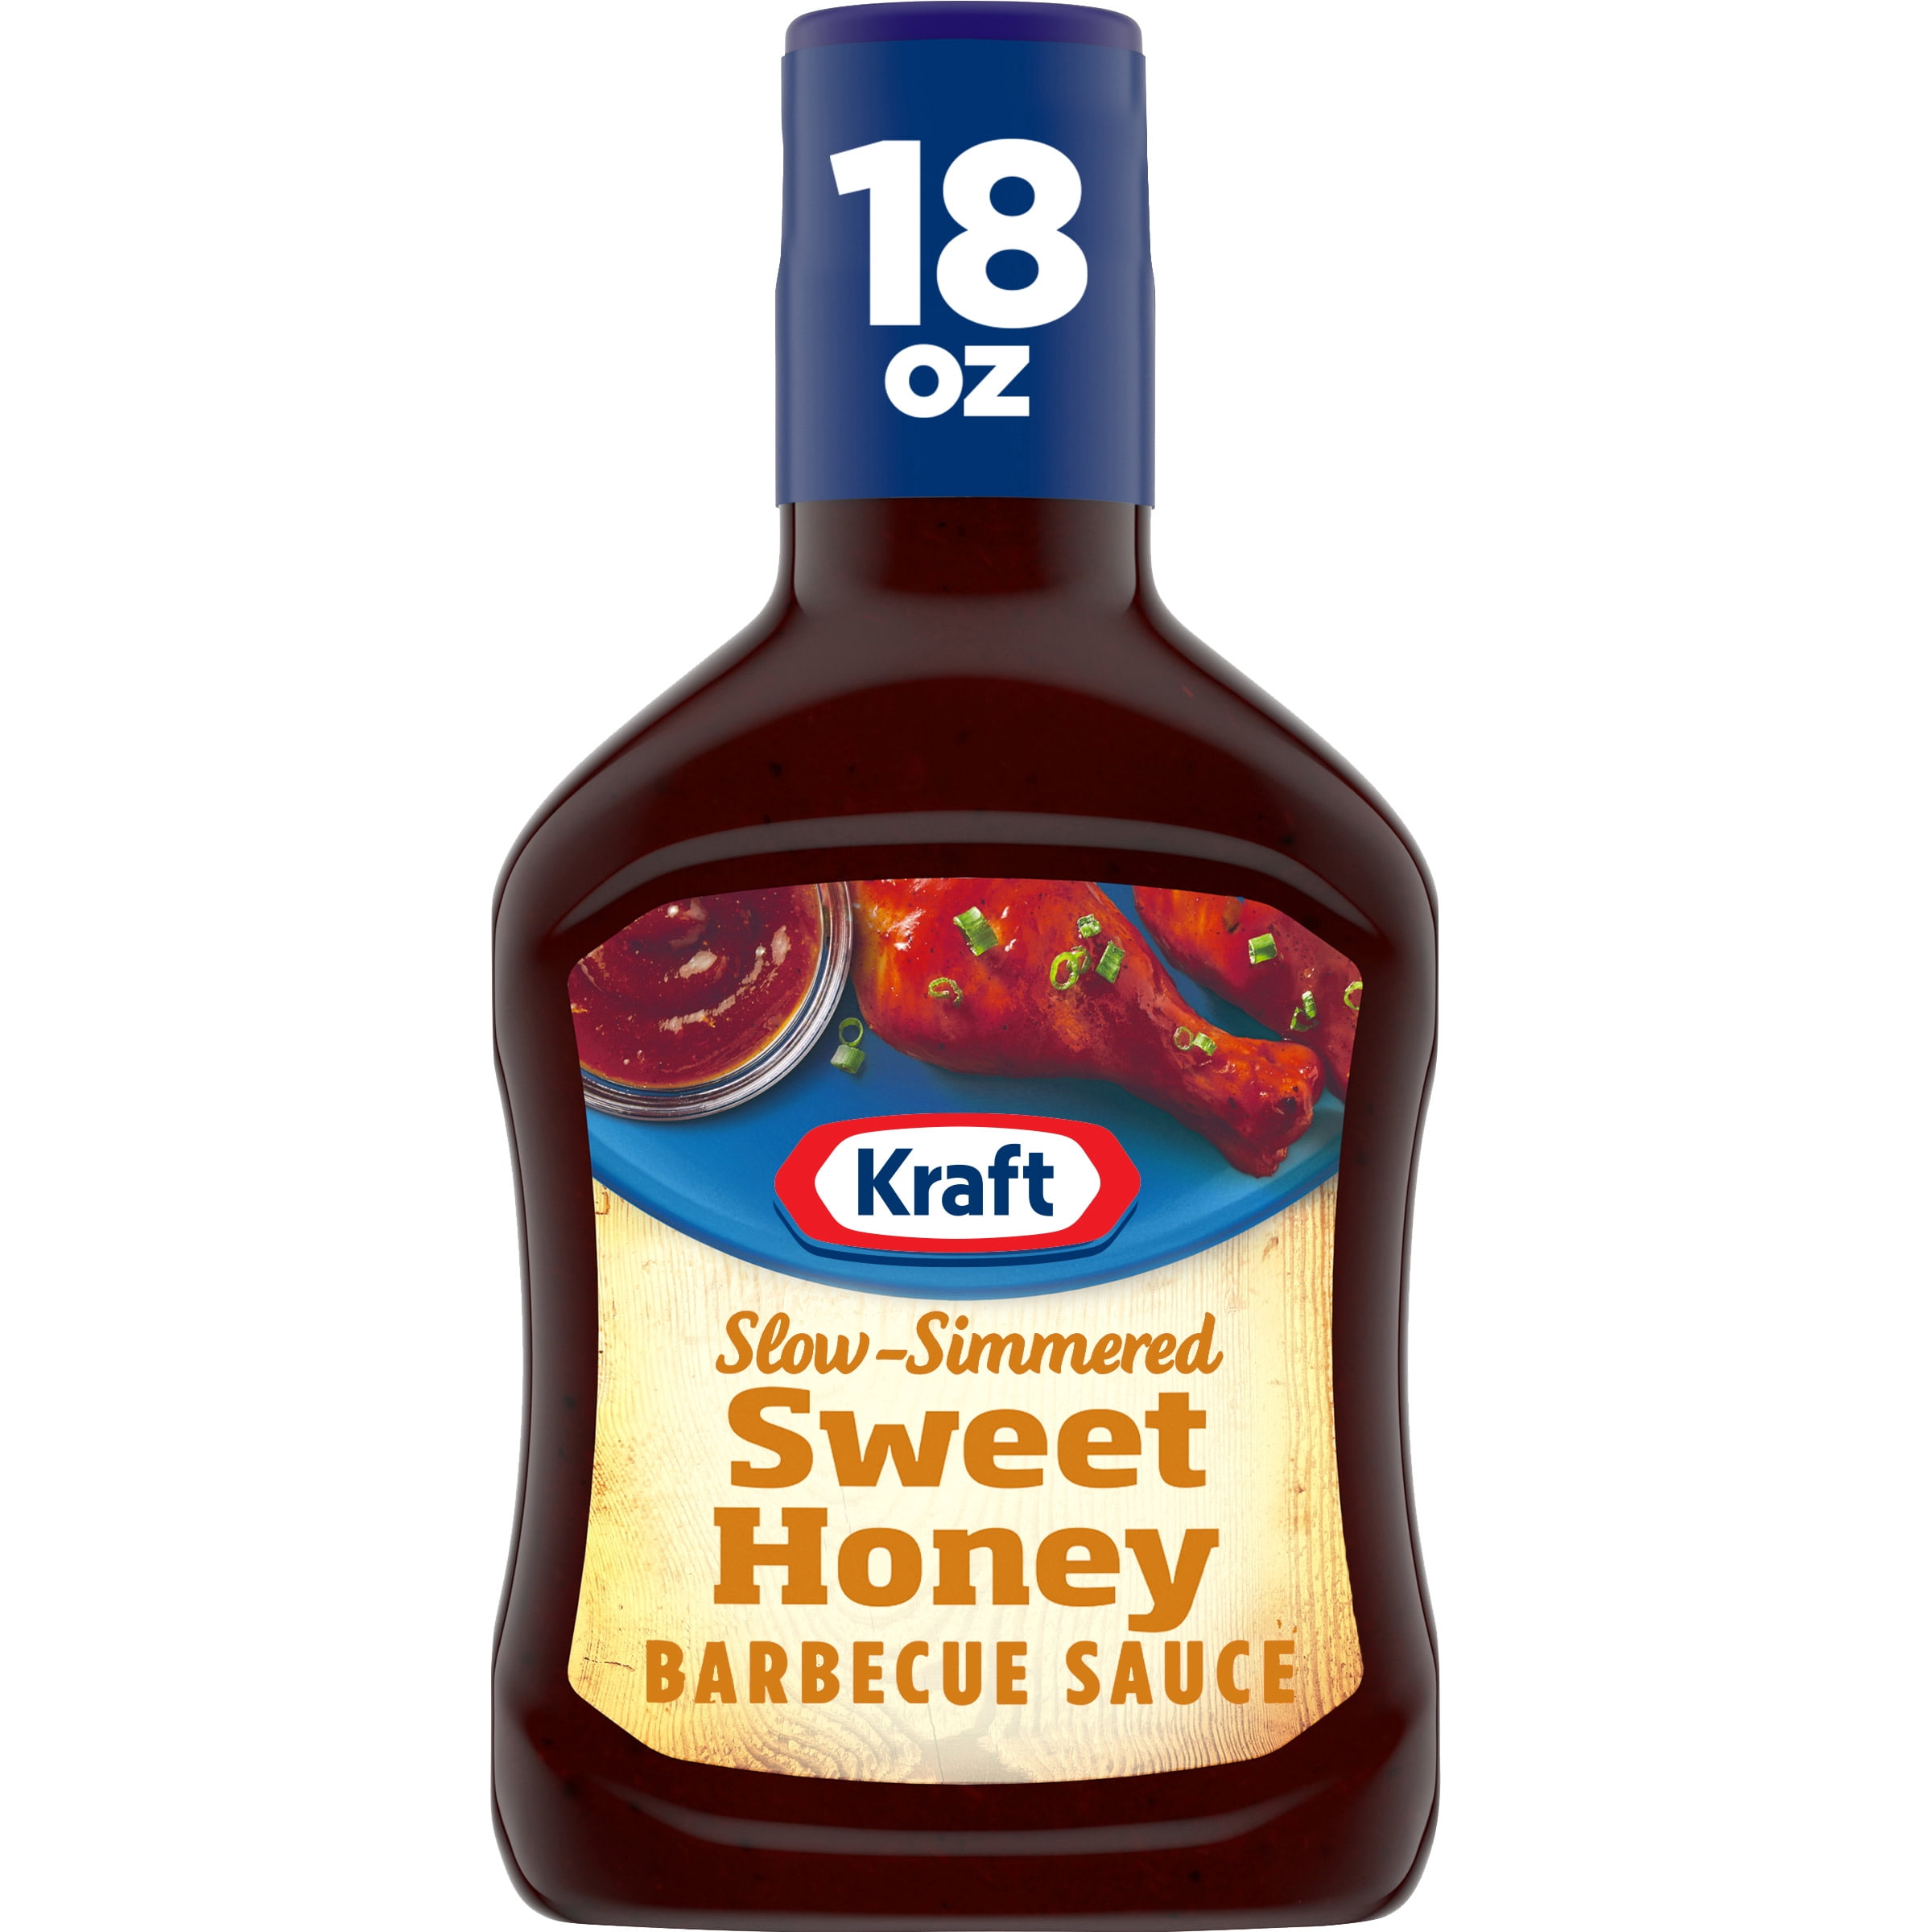 Kraft Sweet Honey Slow Simmered Barbecue Bbq Sauce 18 Oz Bottle